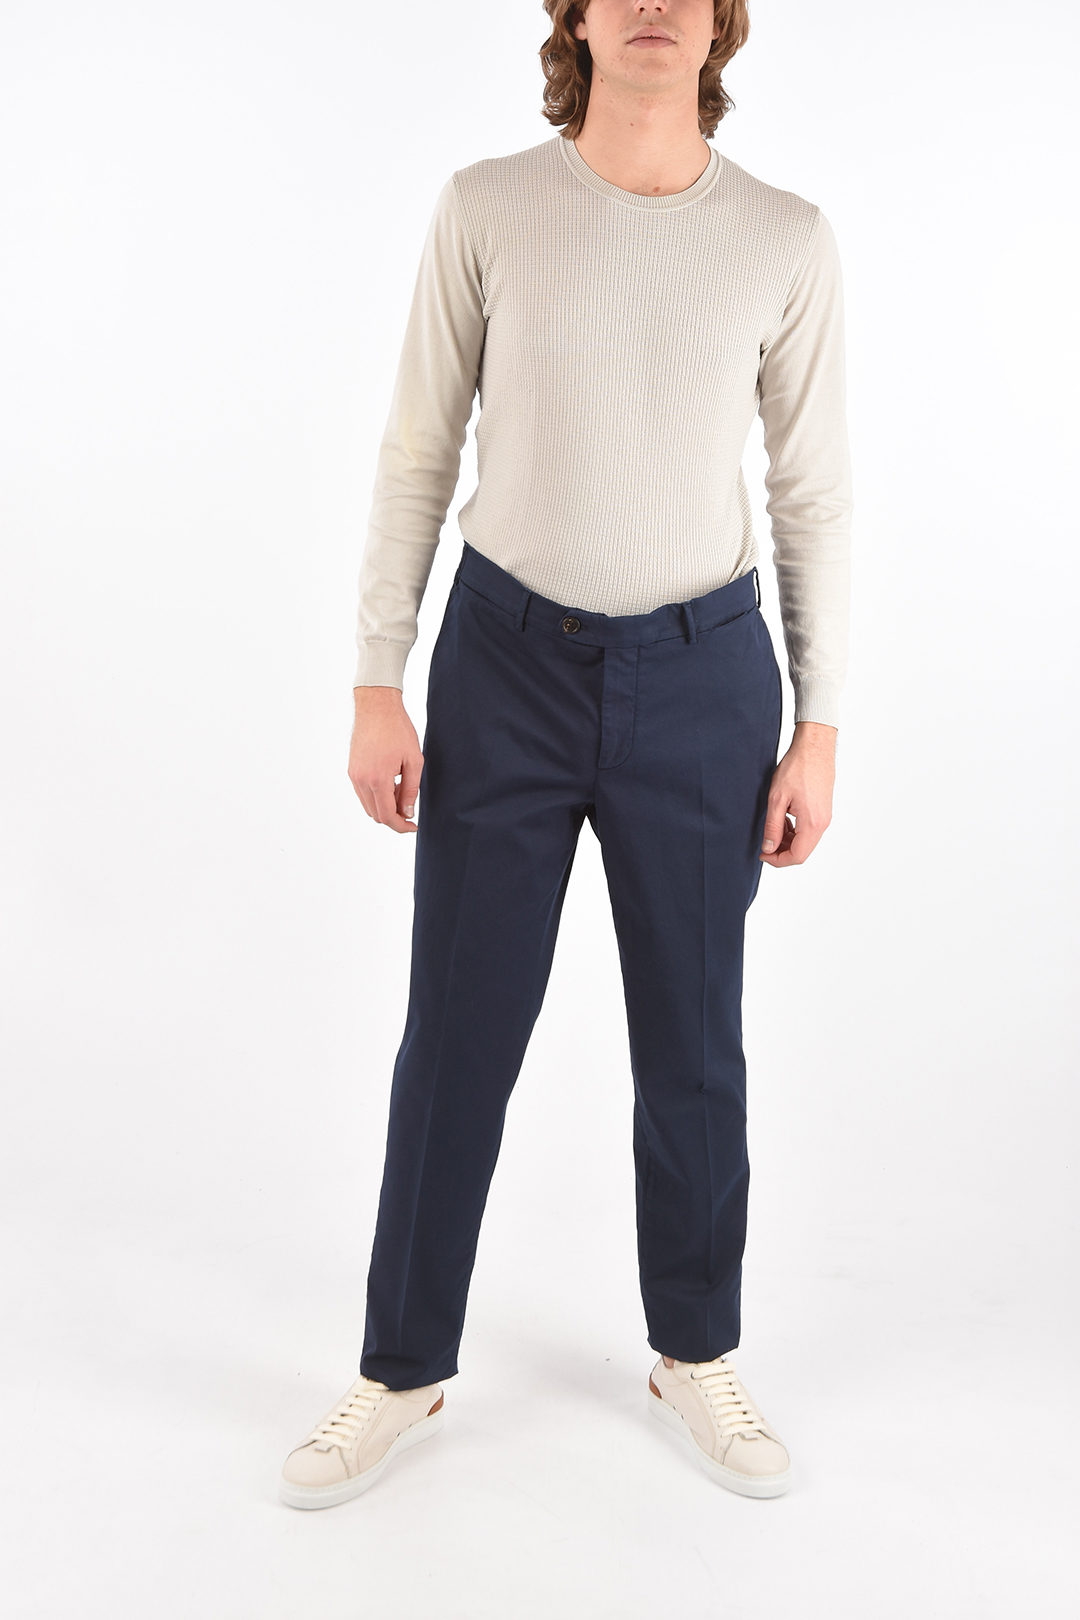 Charles Tyrwhitt Italian Moleskin Slim Fit Trousers Mocha at John Lewis   Partners